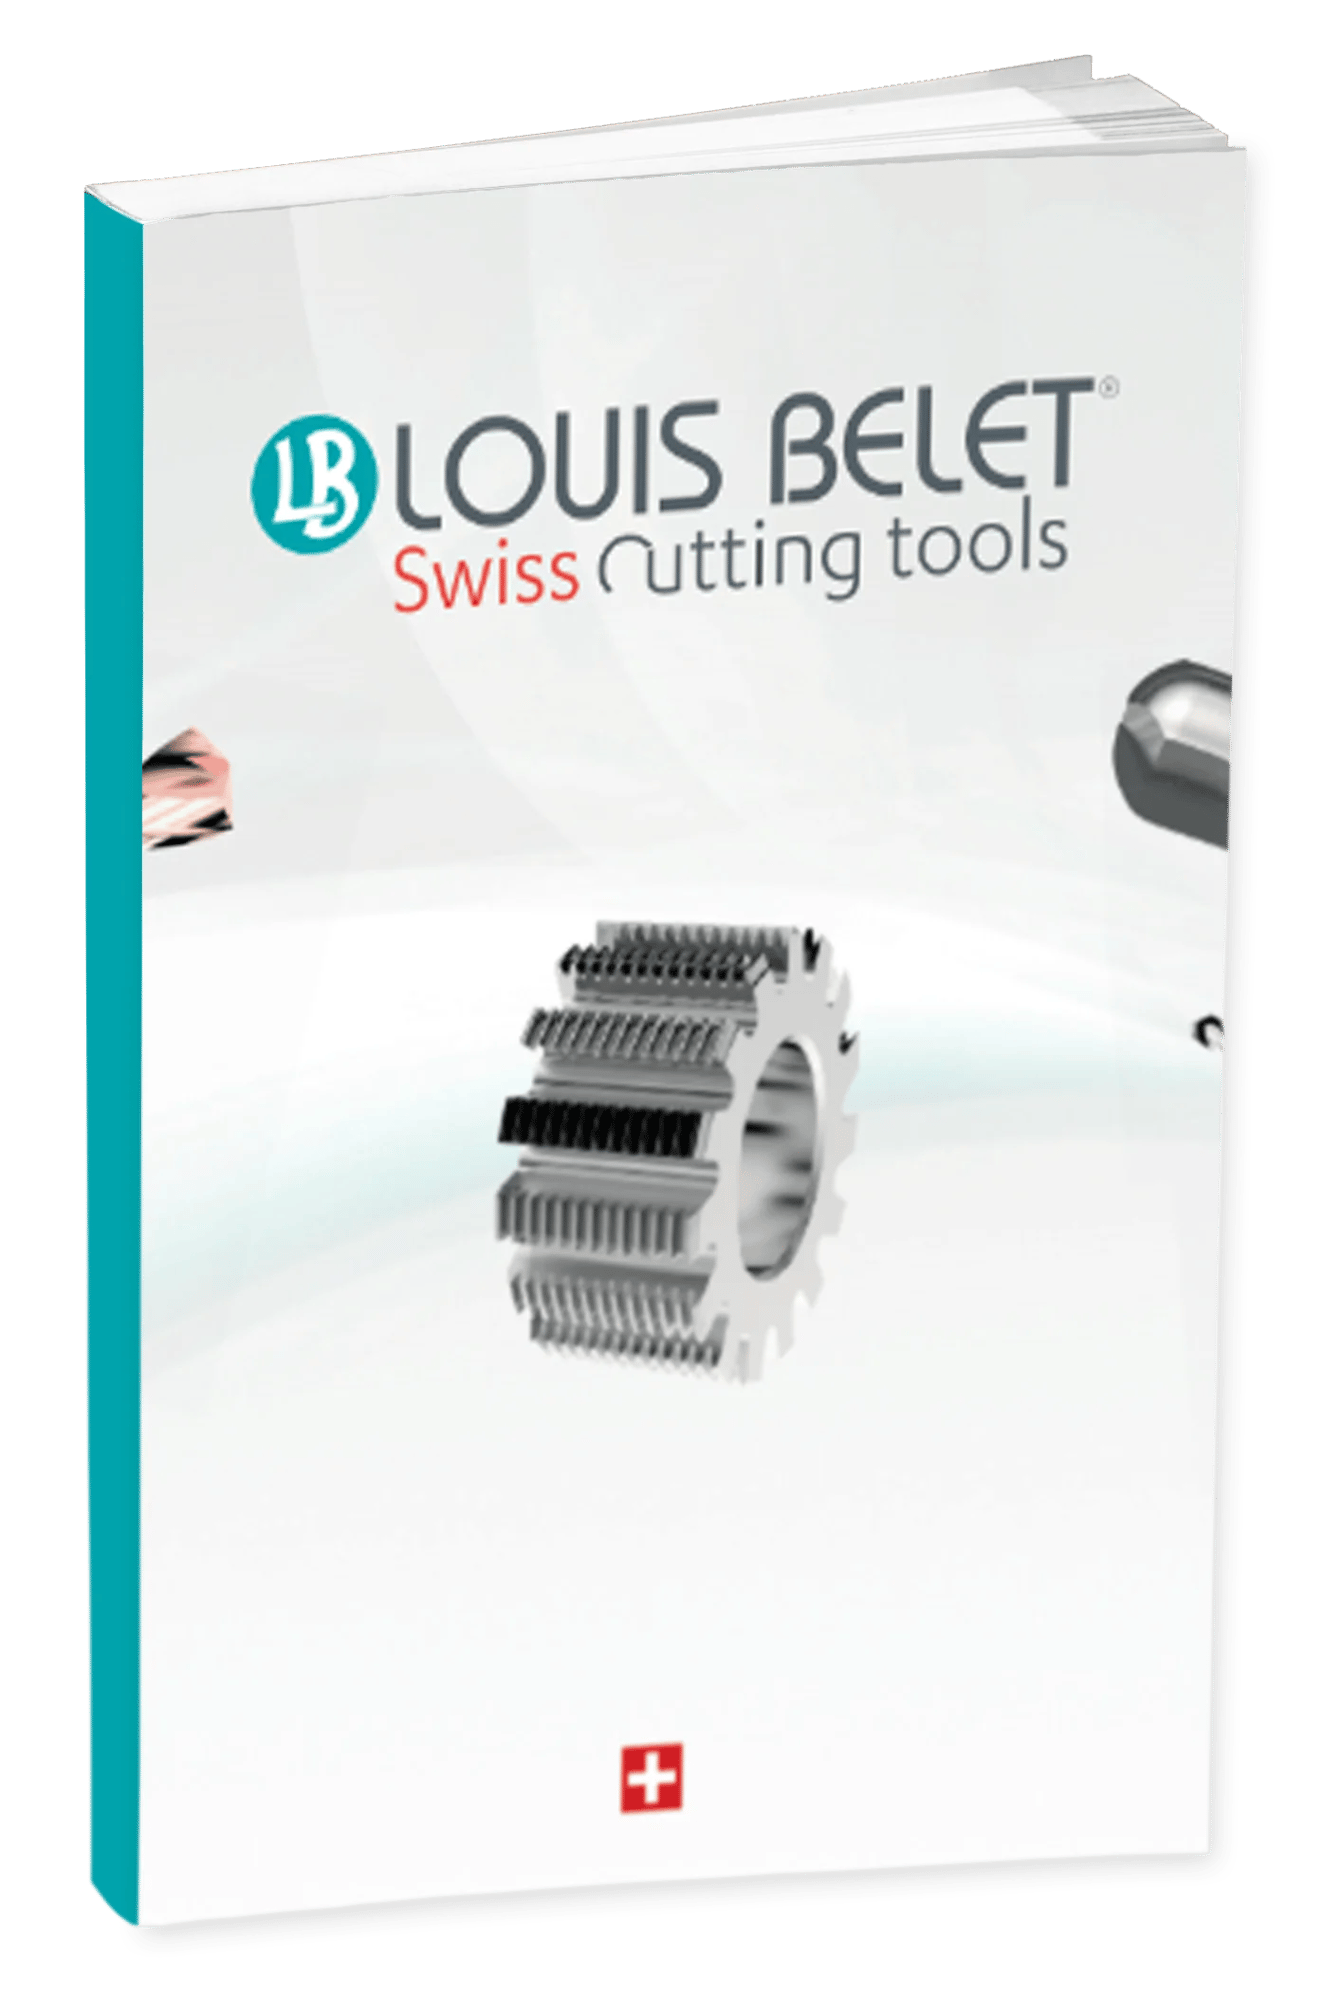 1. Louis Belet Company Presentation Brochure 2023